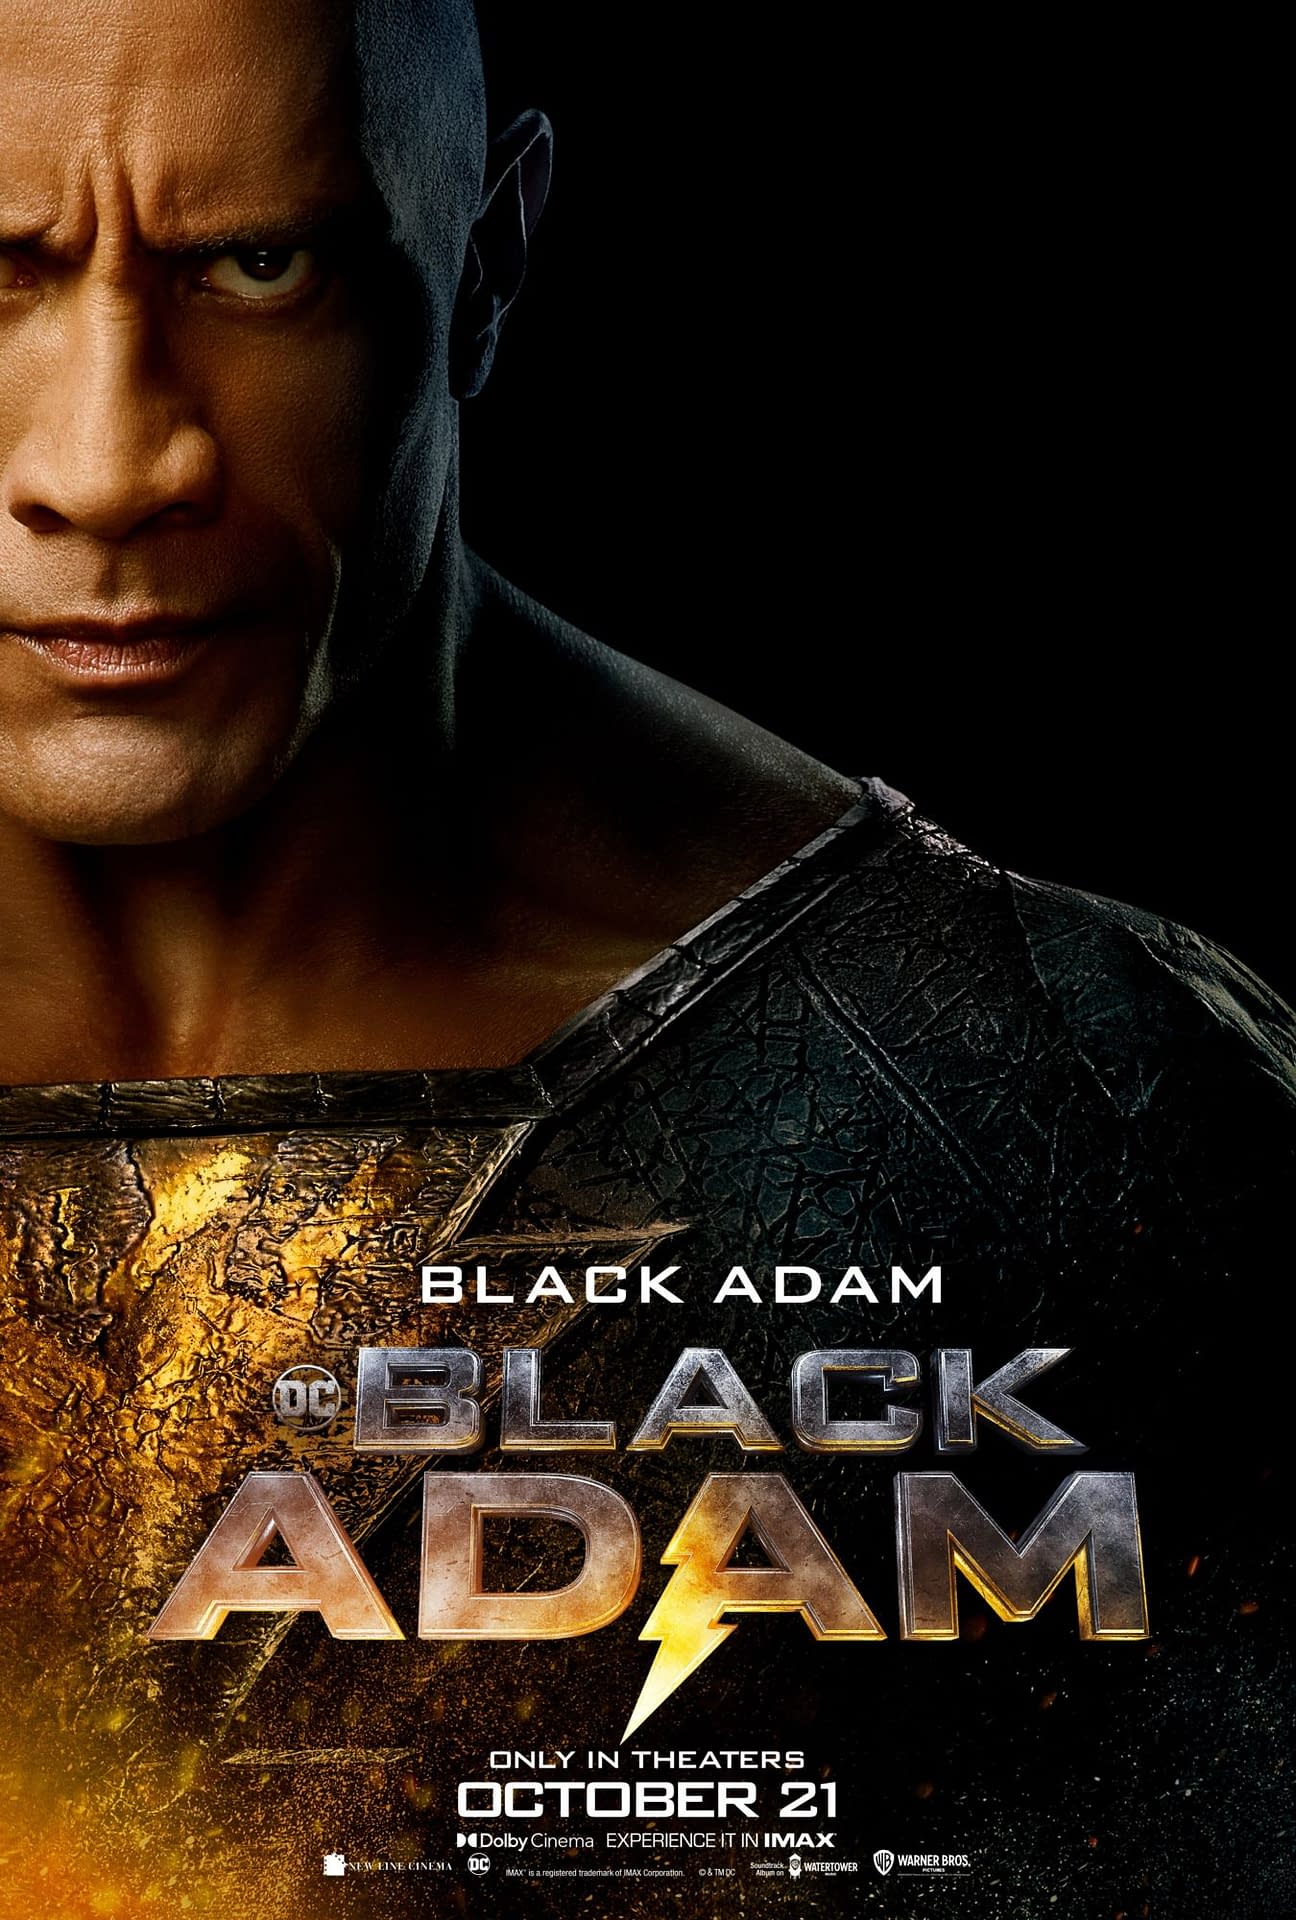 Can Black Adam Box Office Save the DCEU?